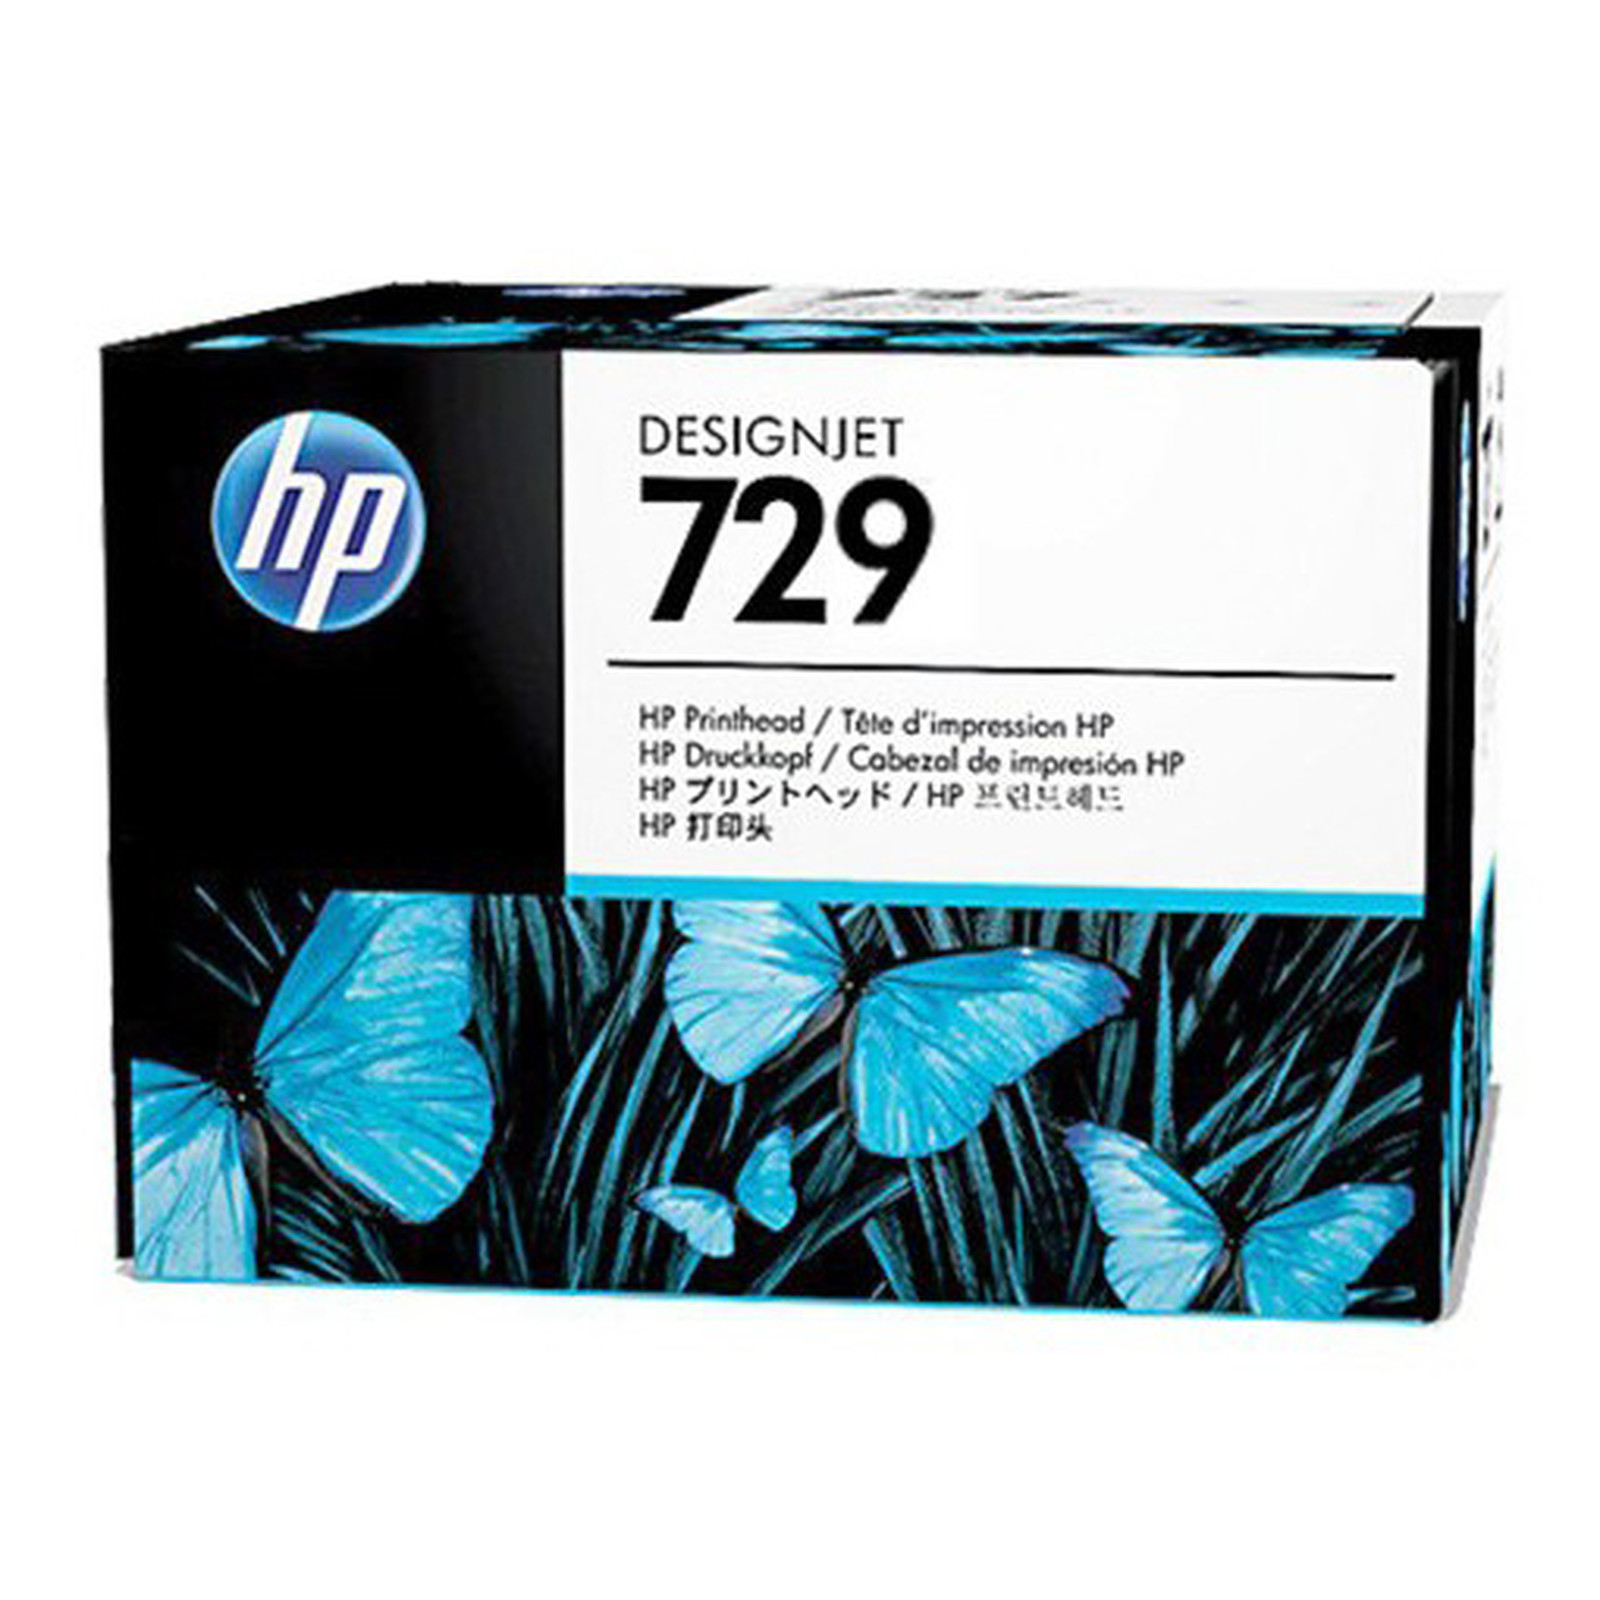 HP Designjet 729 (F9J81A) - Noir, Cyan, Magenta et Jaune - Cartouche imprimante HP